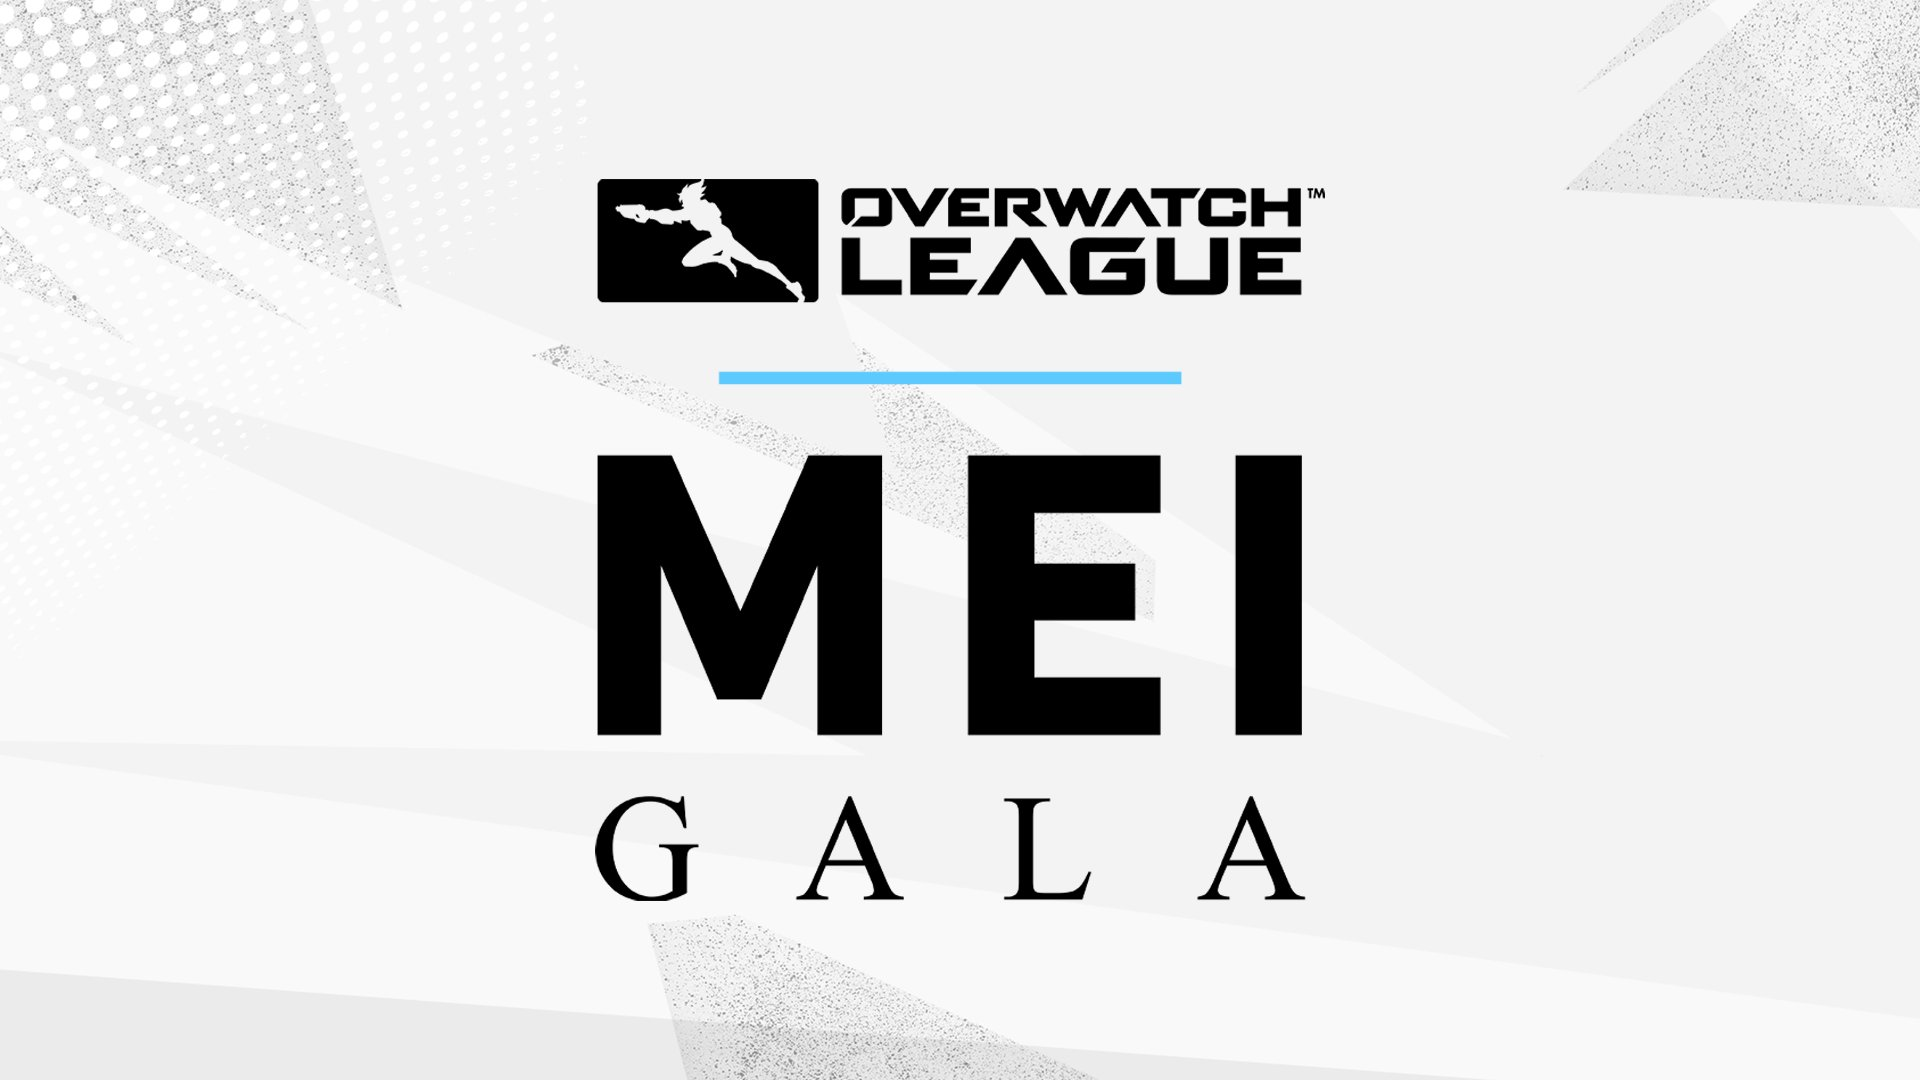 віртуальне шоу от Overwatch - Met Gala